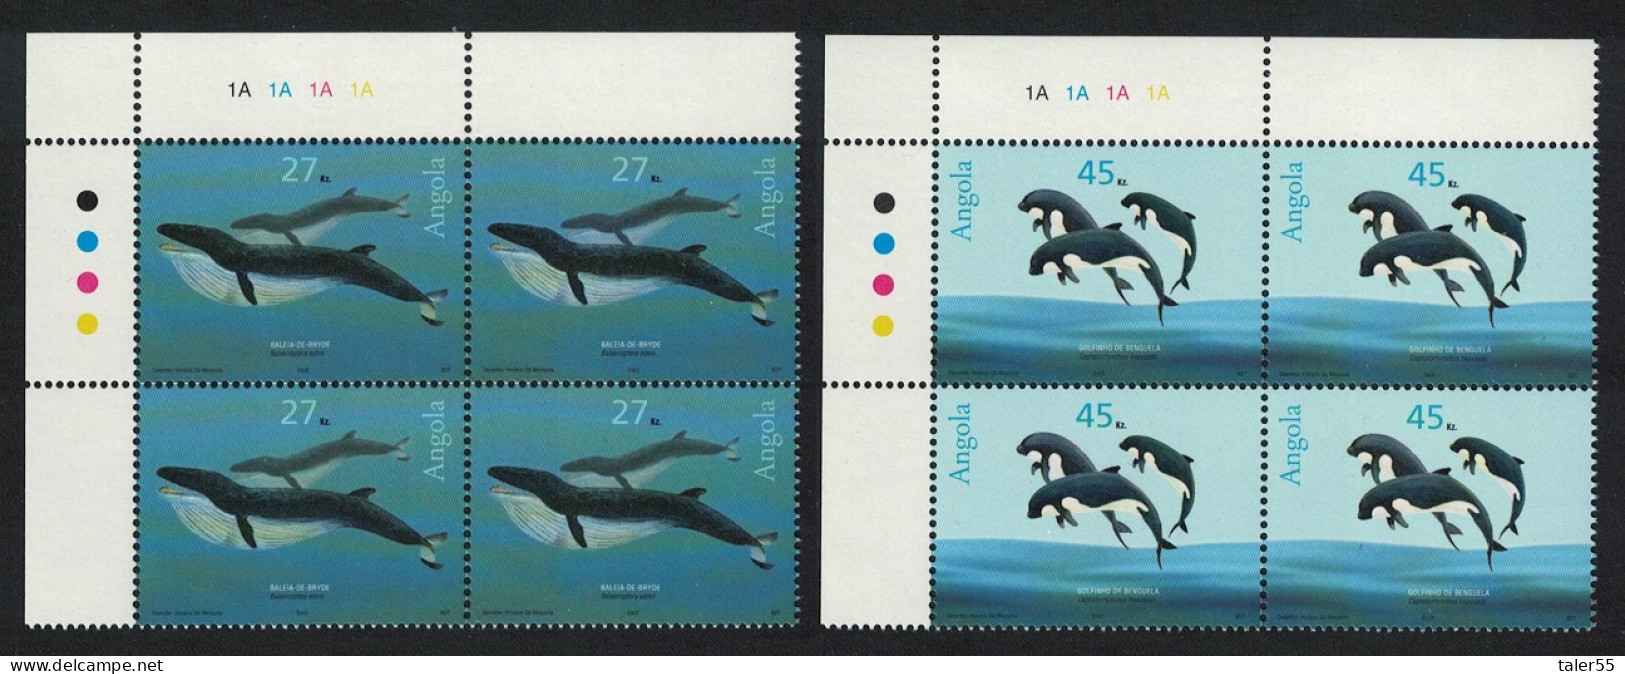 Angola Whales Dolphins Marine Mammals 2v Corner Blocks Of 4 2003 MNH SG#1683-1684 - Angola